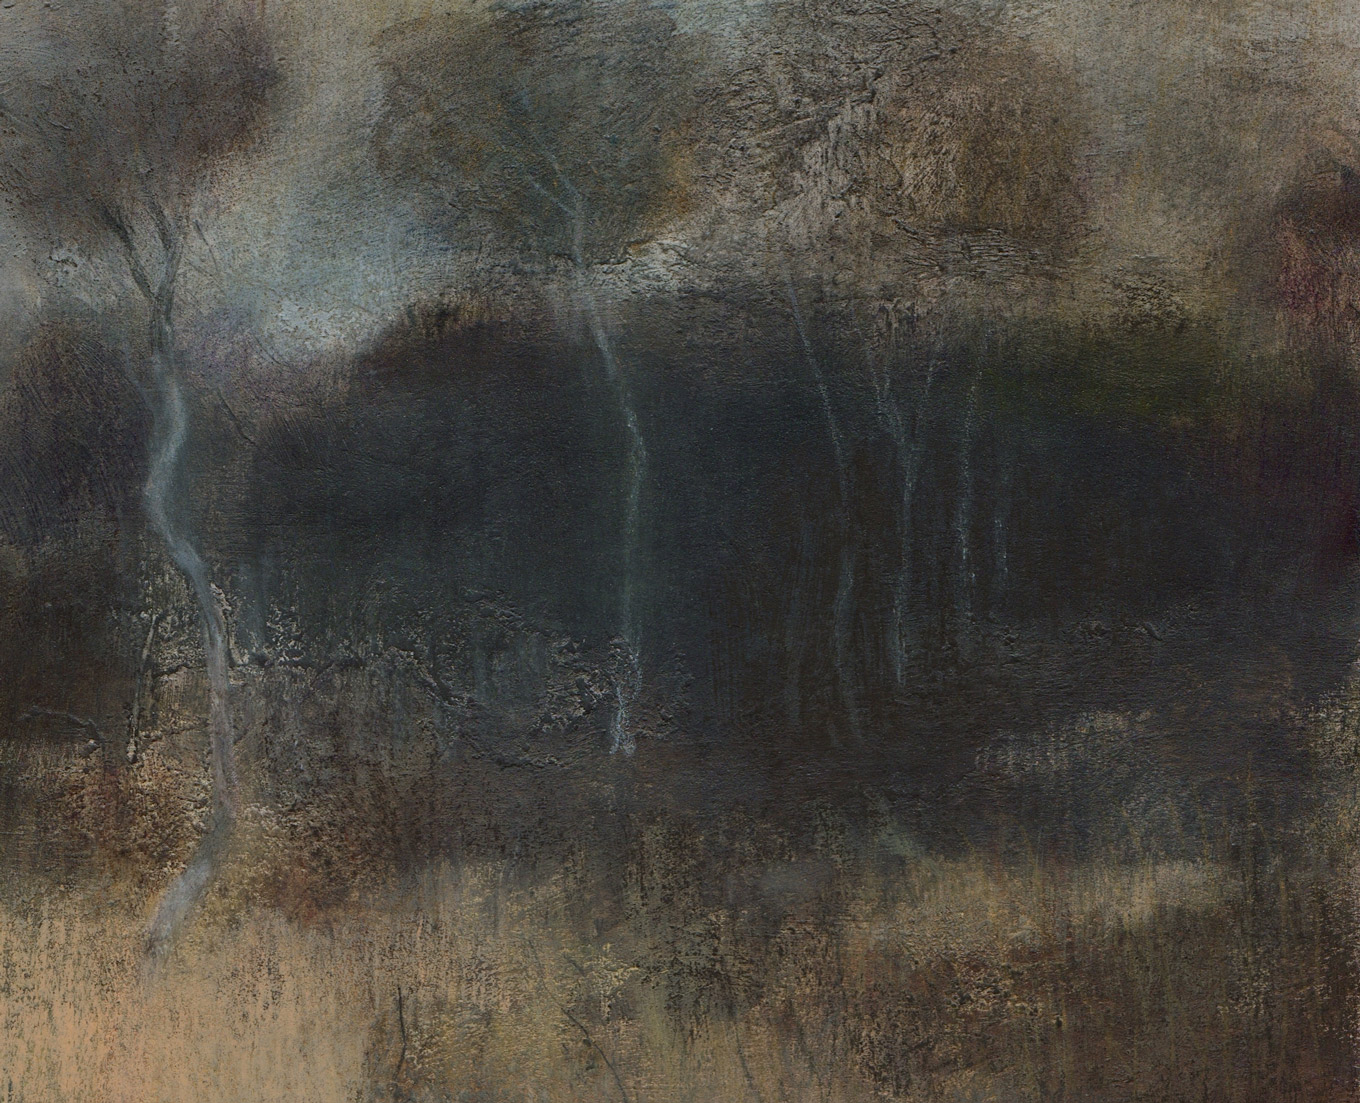 L1189 - Nicholas Herbert, British Artist, mixed media landscape painting of Chobham Common, mixed media on paper,2020